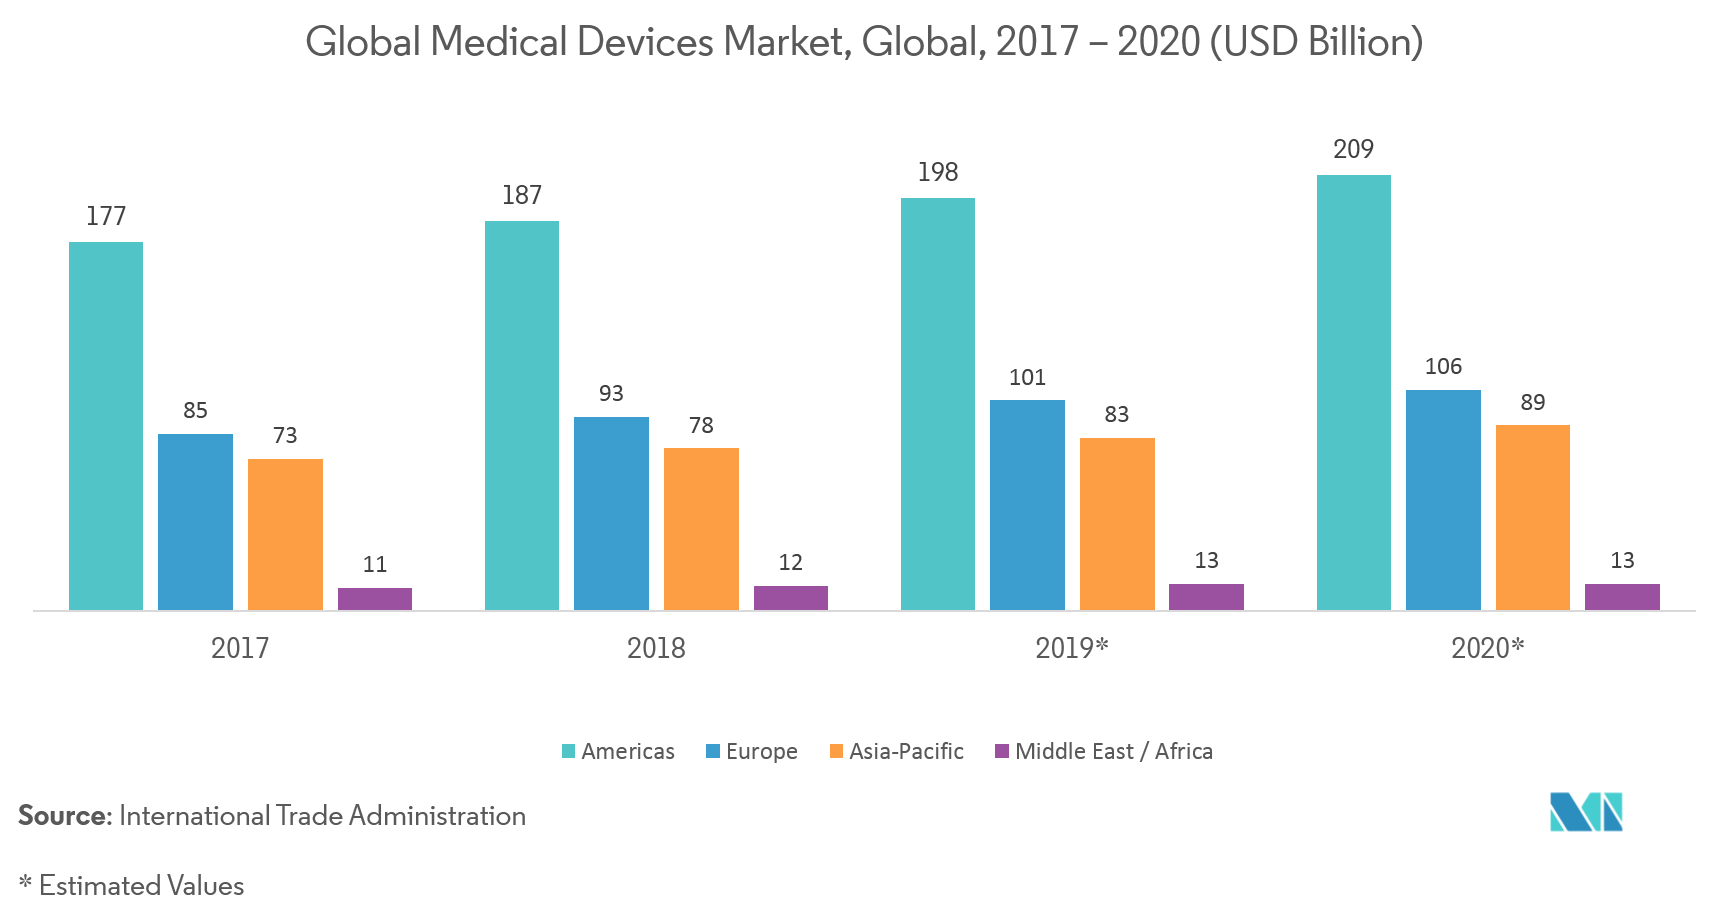 Physical Vapor Deposition (PVD) Equipment Market : Global Medical Devices Market, Global, 2017-2020 (USD Billion)